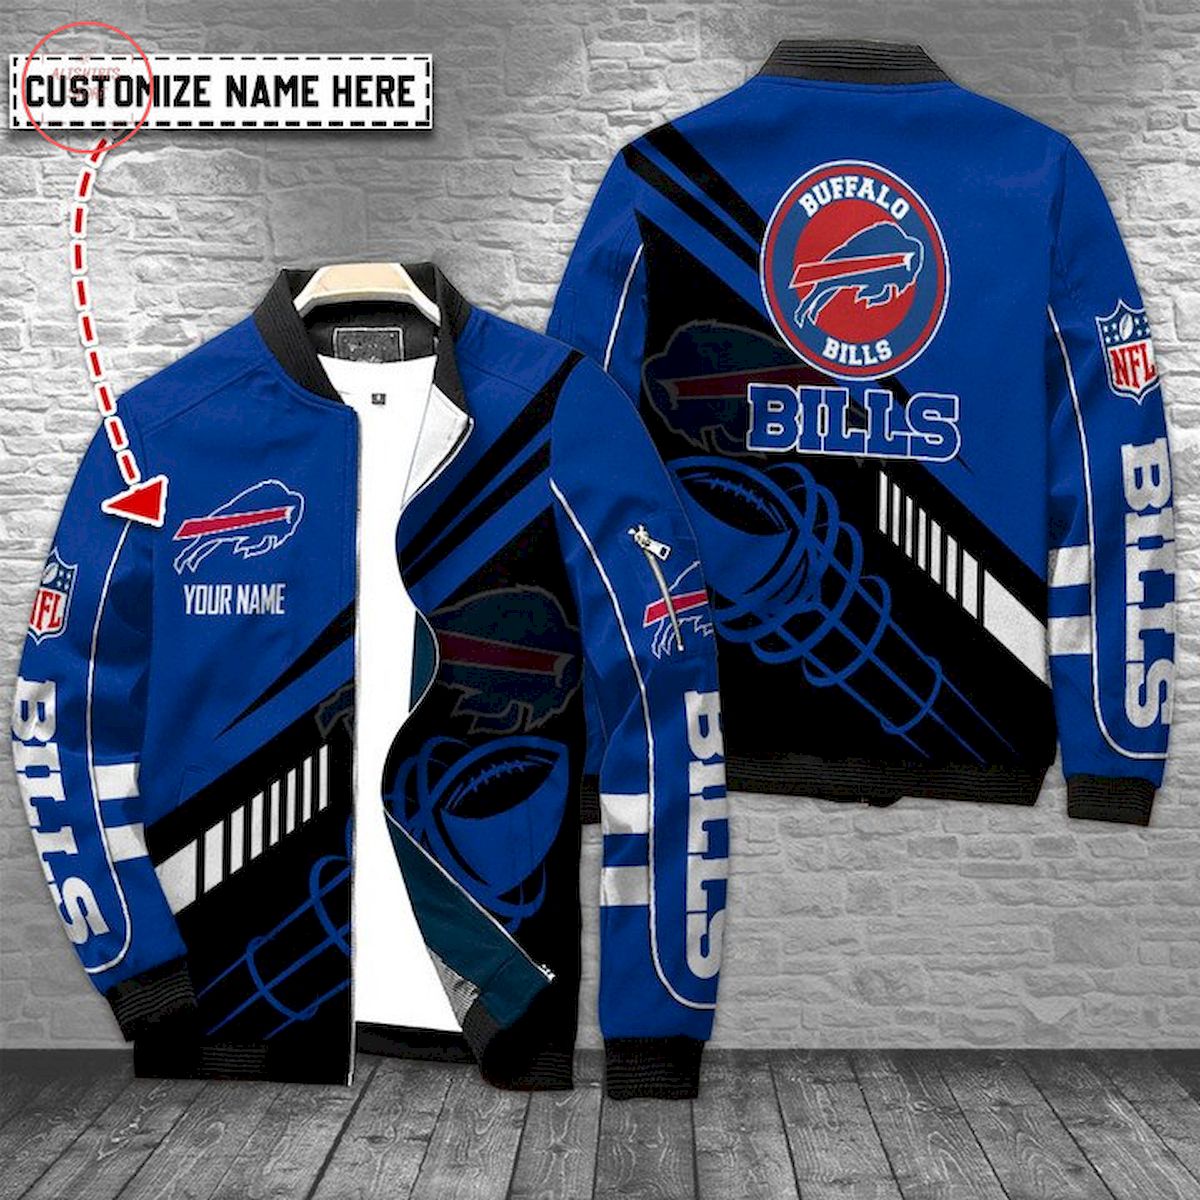 NFL Buffalo Bills Personalized Bomber Jacket